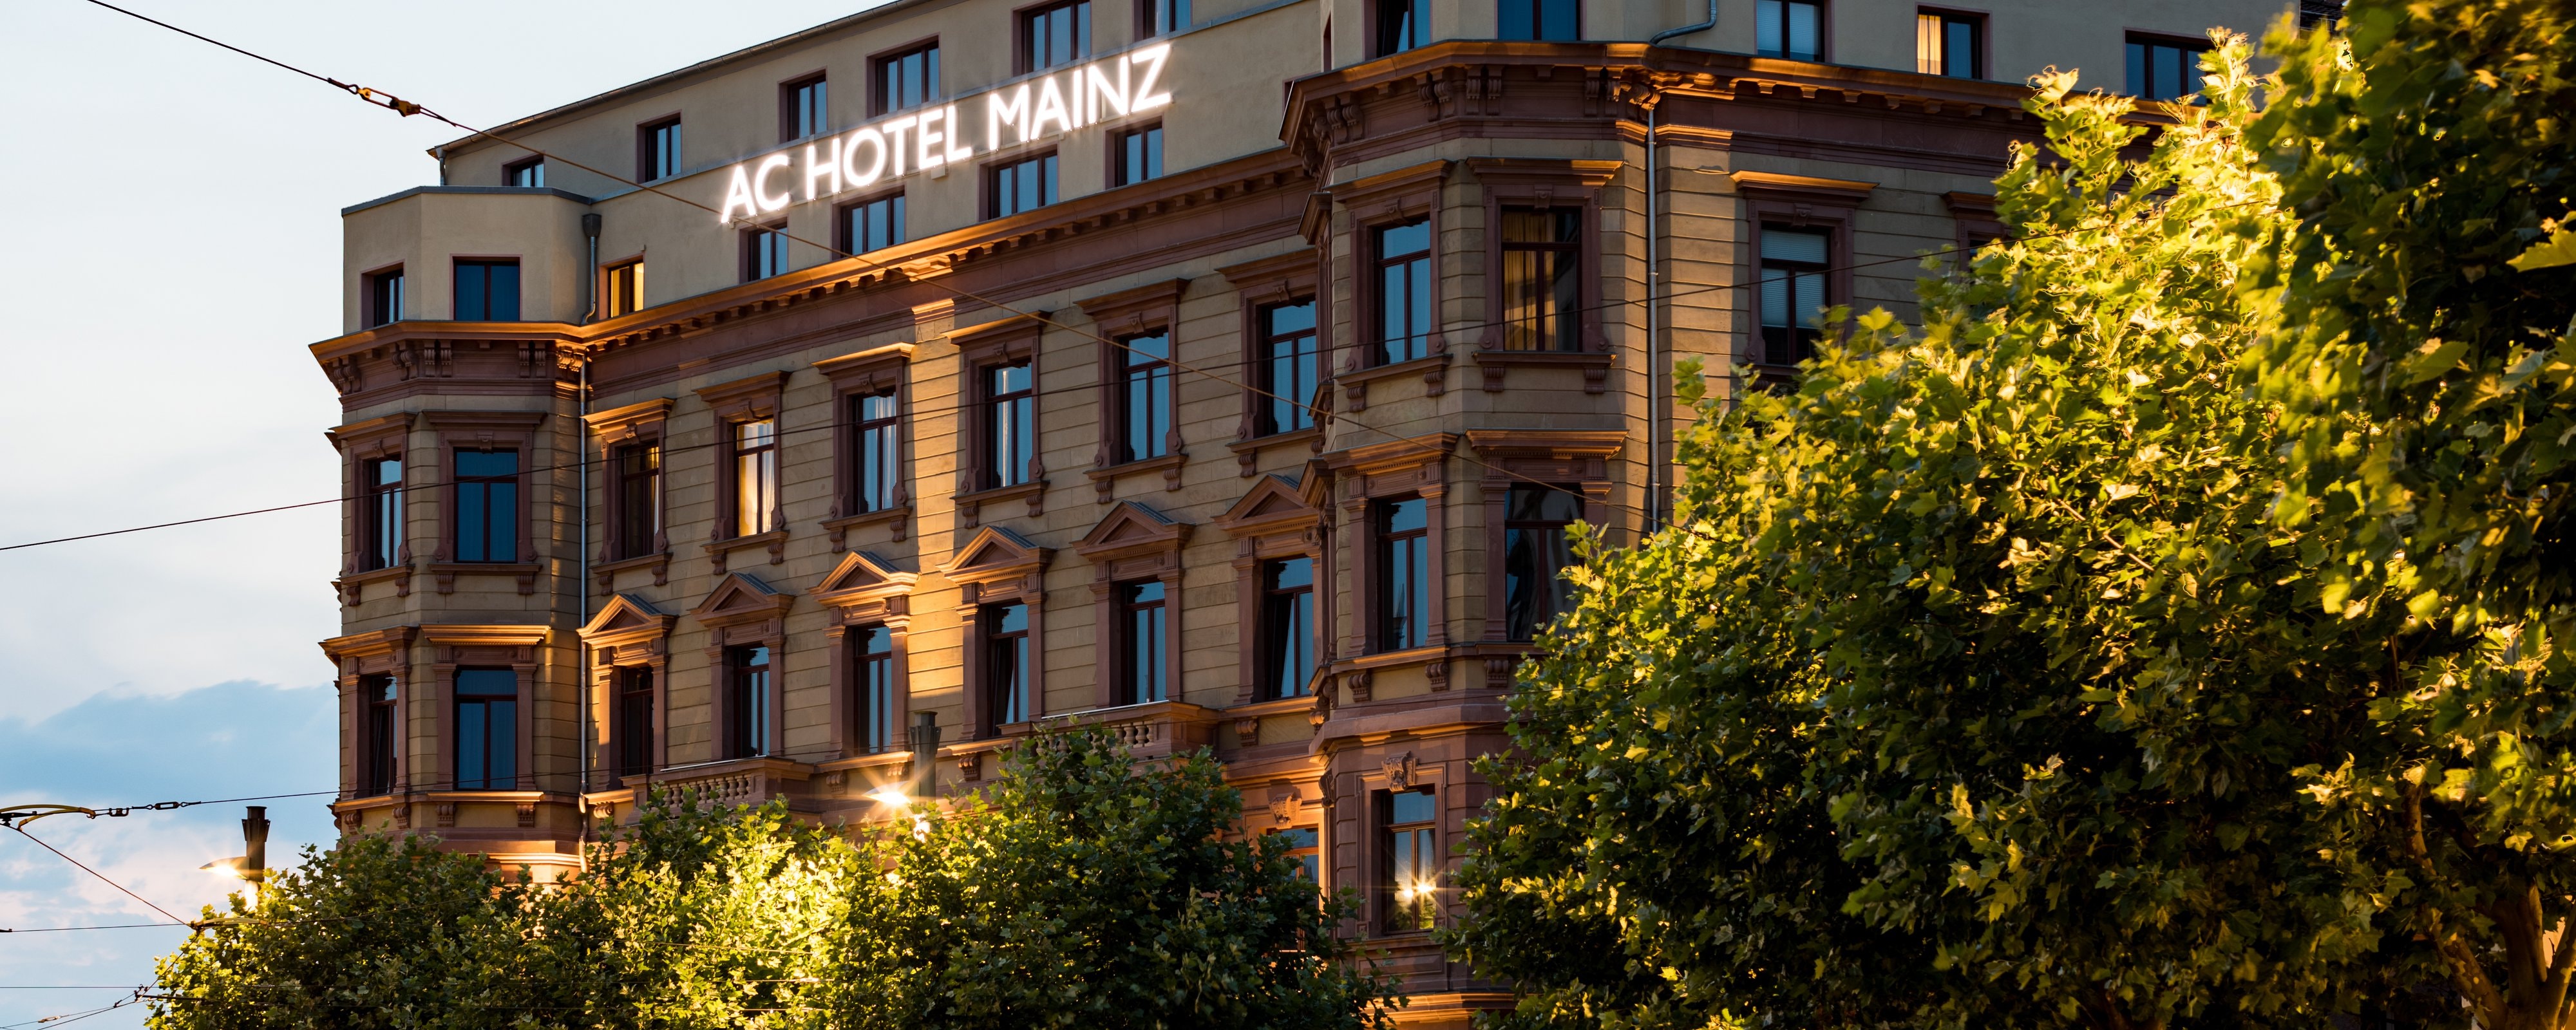 Image for AC Hotel Mainz, a Marriott hotel.